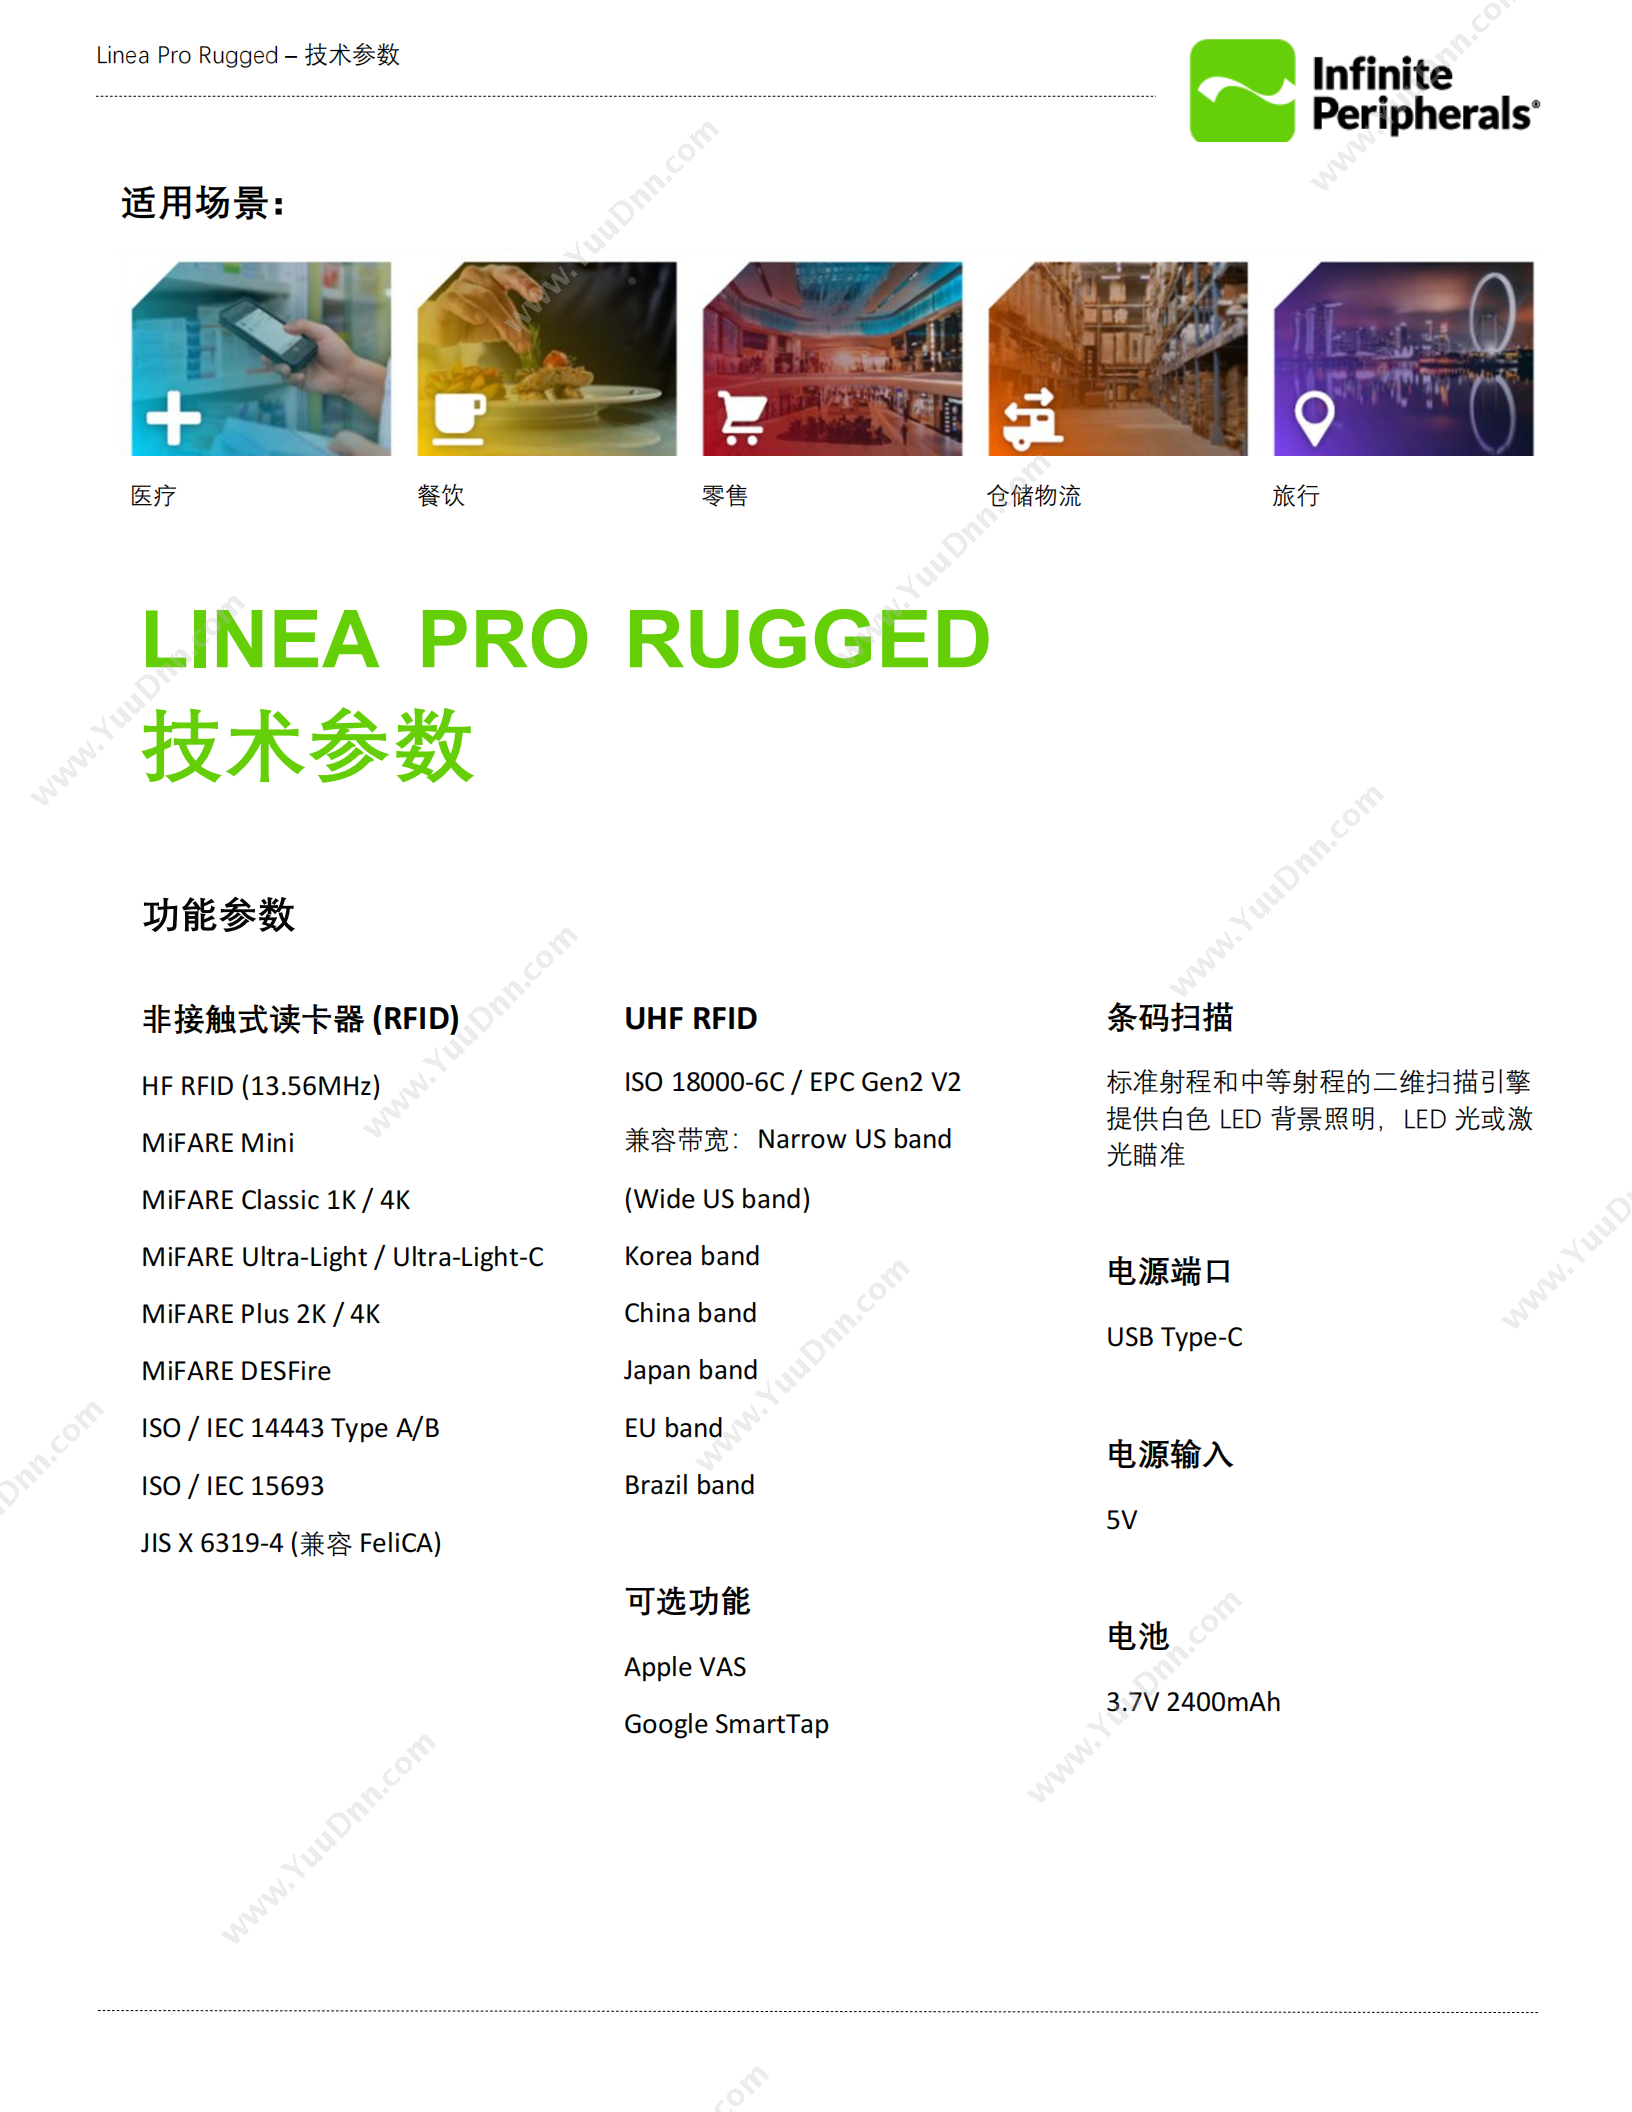 Linea Pro Rugged条码扫描终端，适用于iPod Touch 5/6/7，iPhone 6S/7/8/SE 2nd，iPhone XR/11 苹果背夹